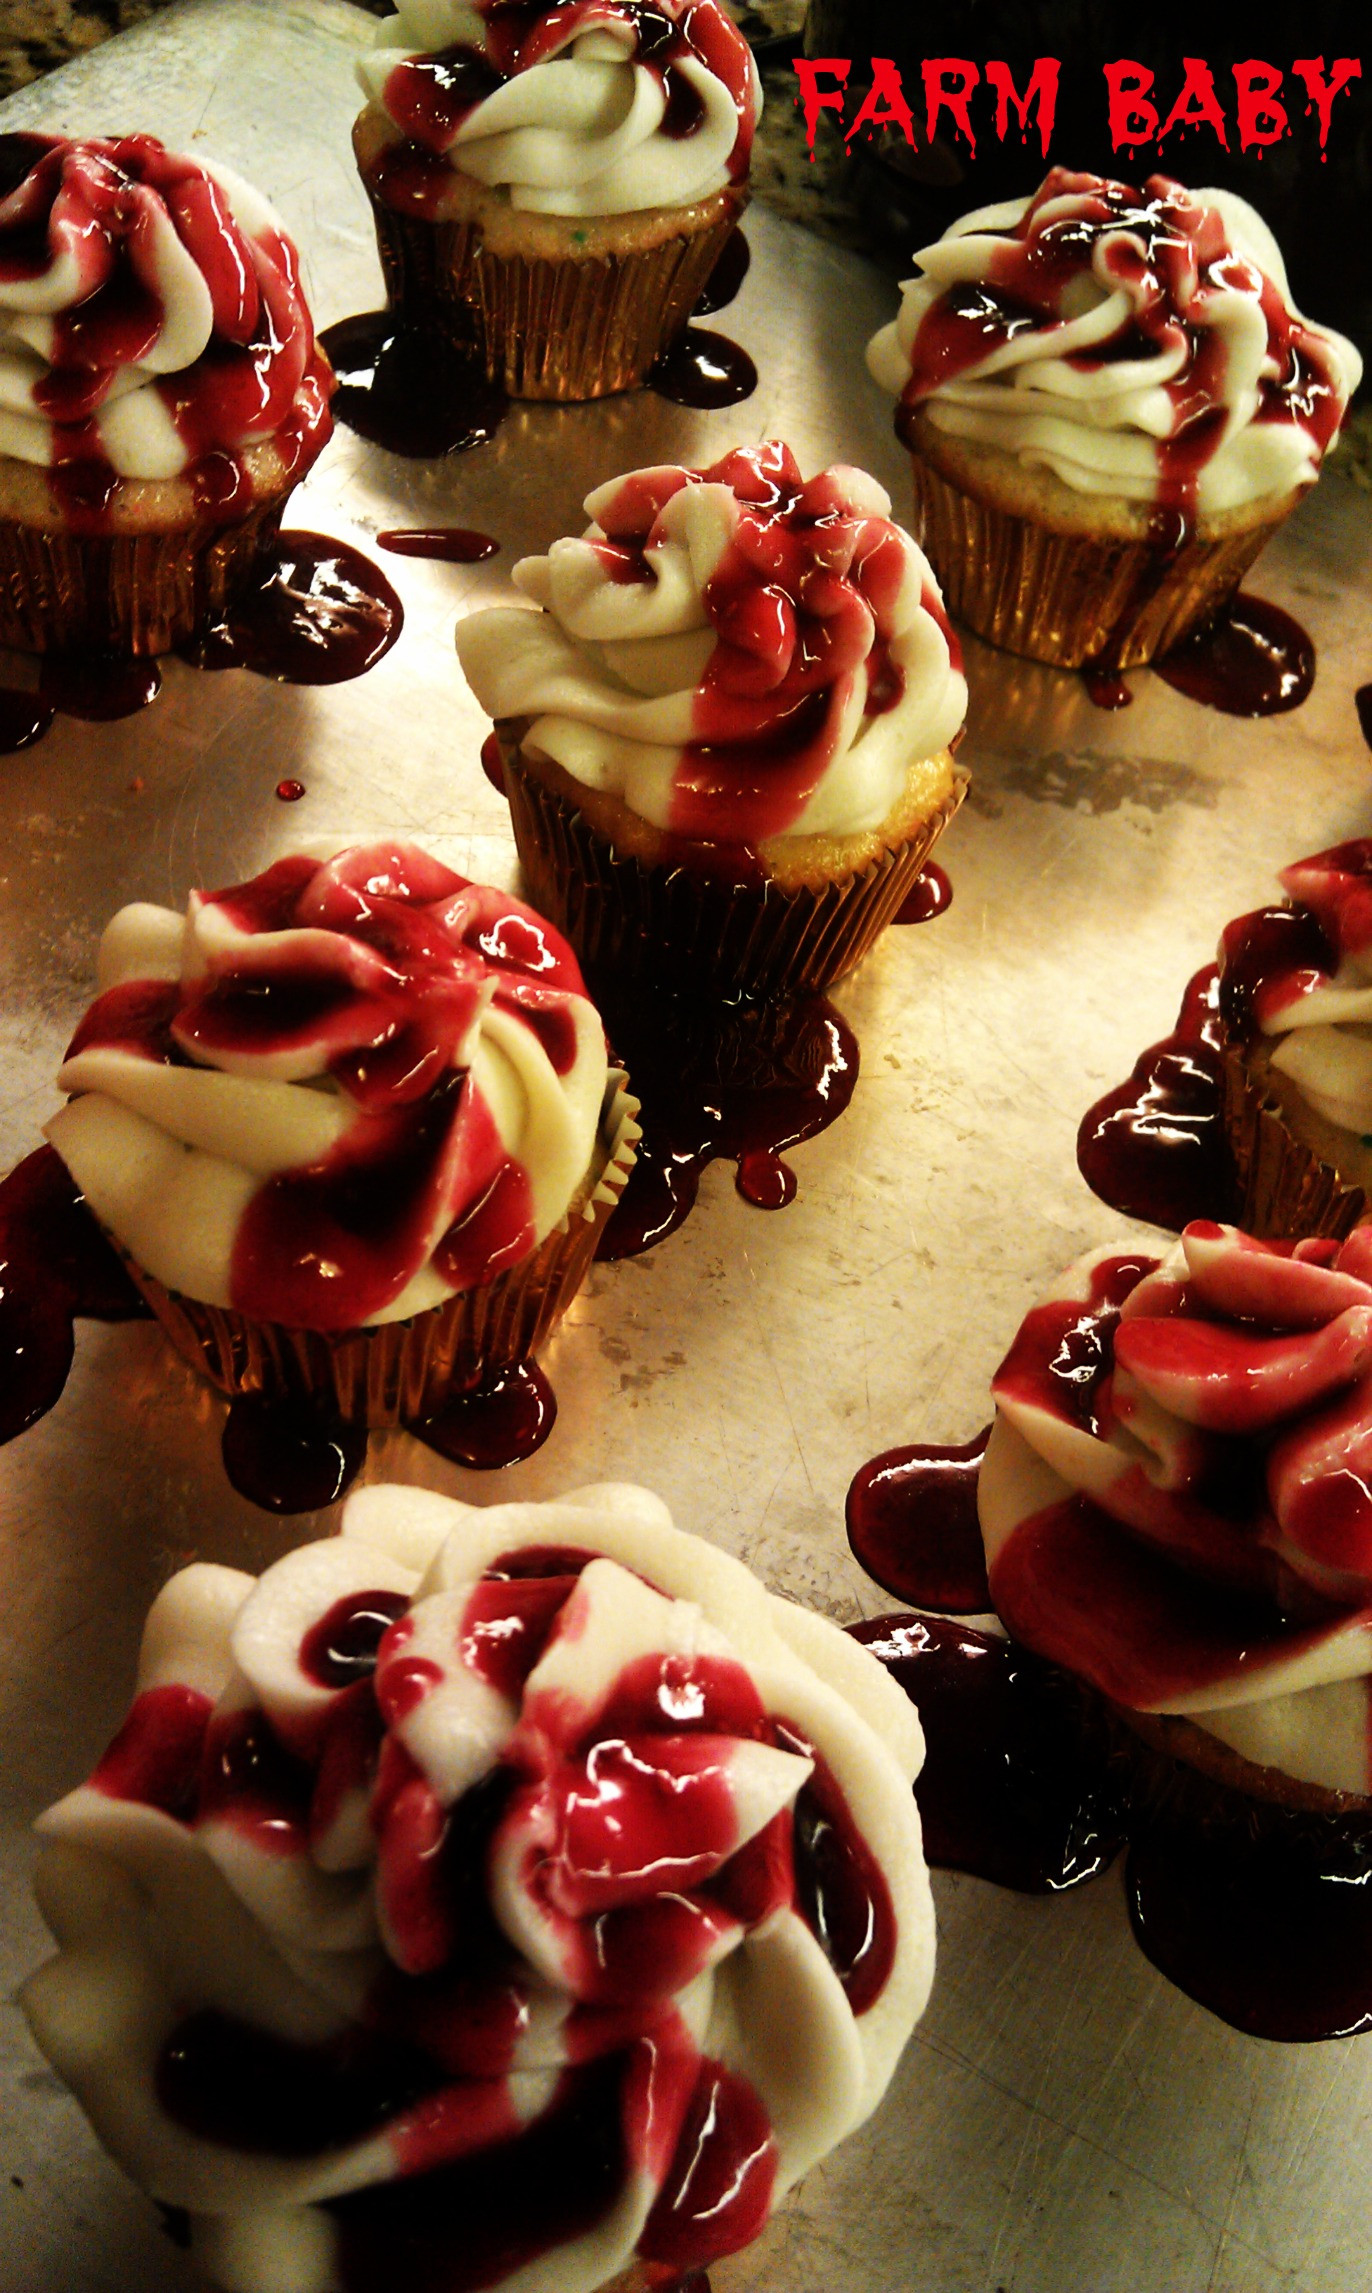 Scary Halloween Cupcakes
 “Bloody” Halloween Cupcakes